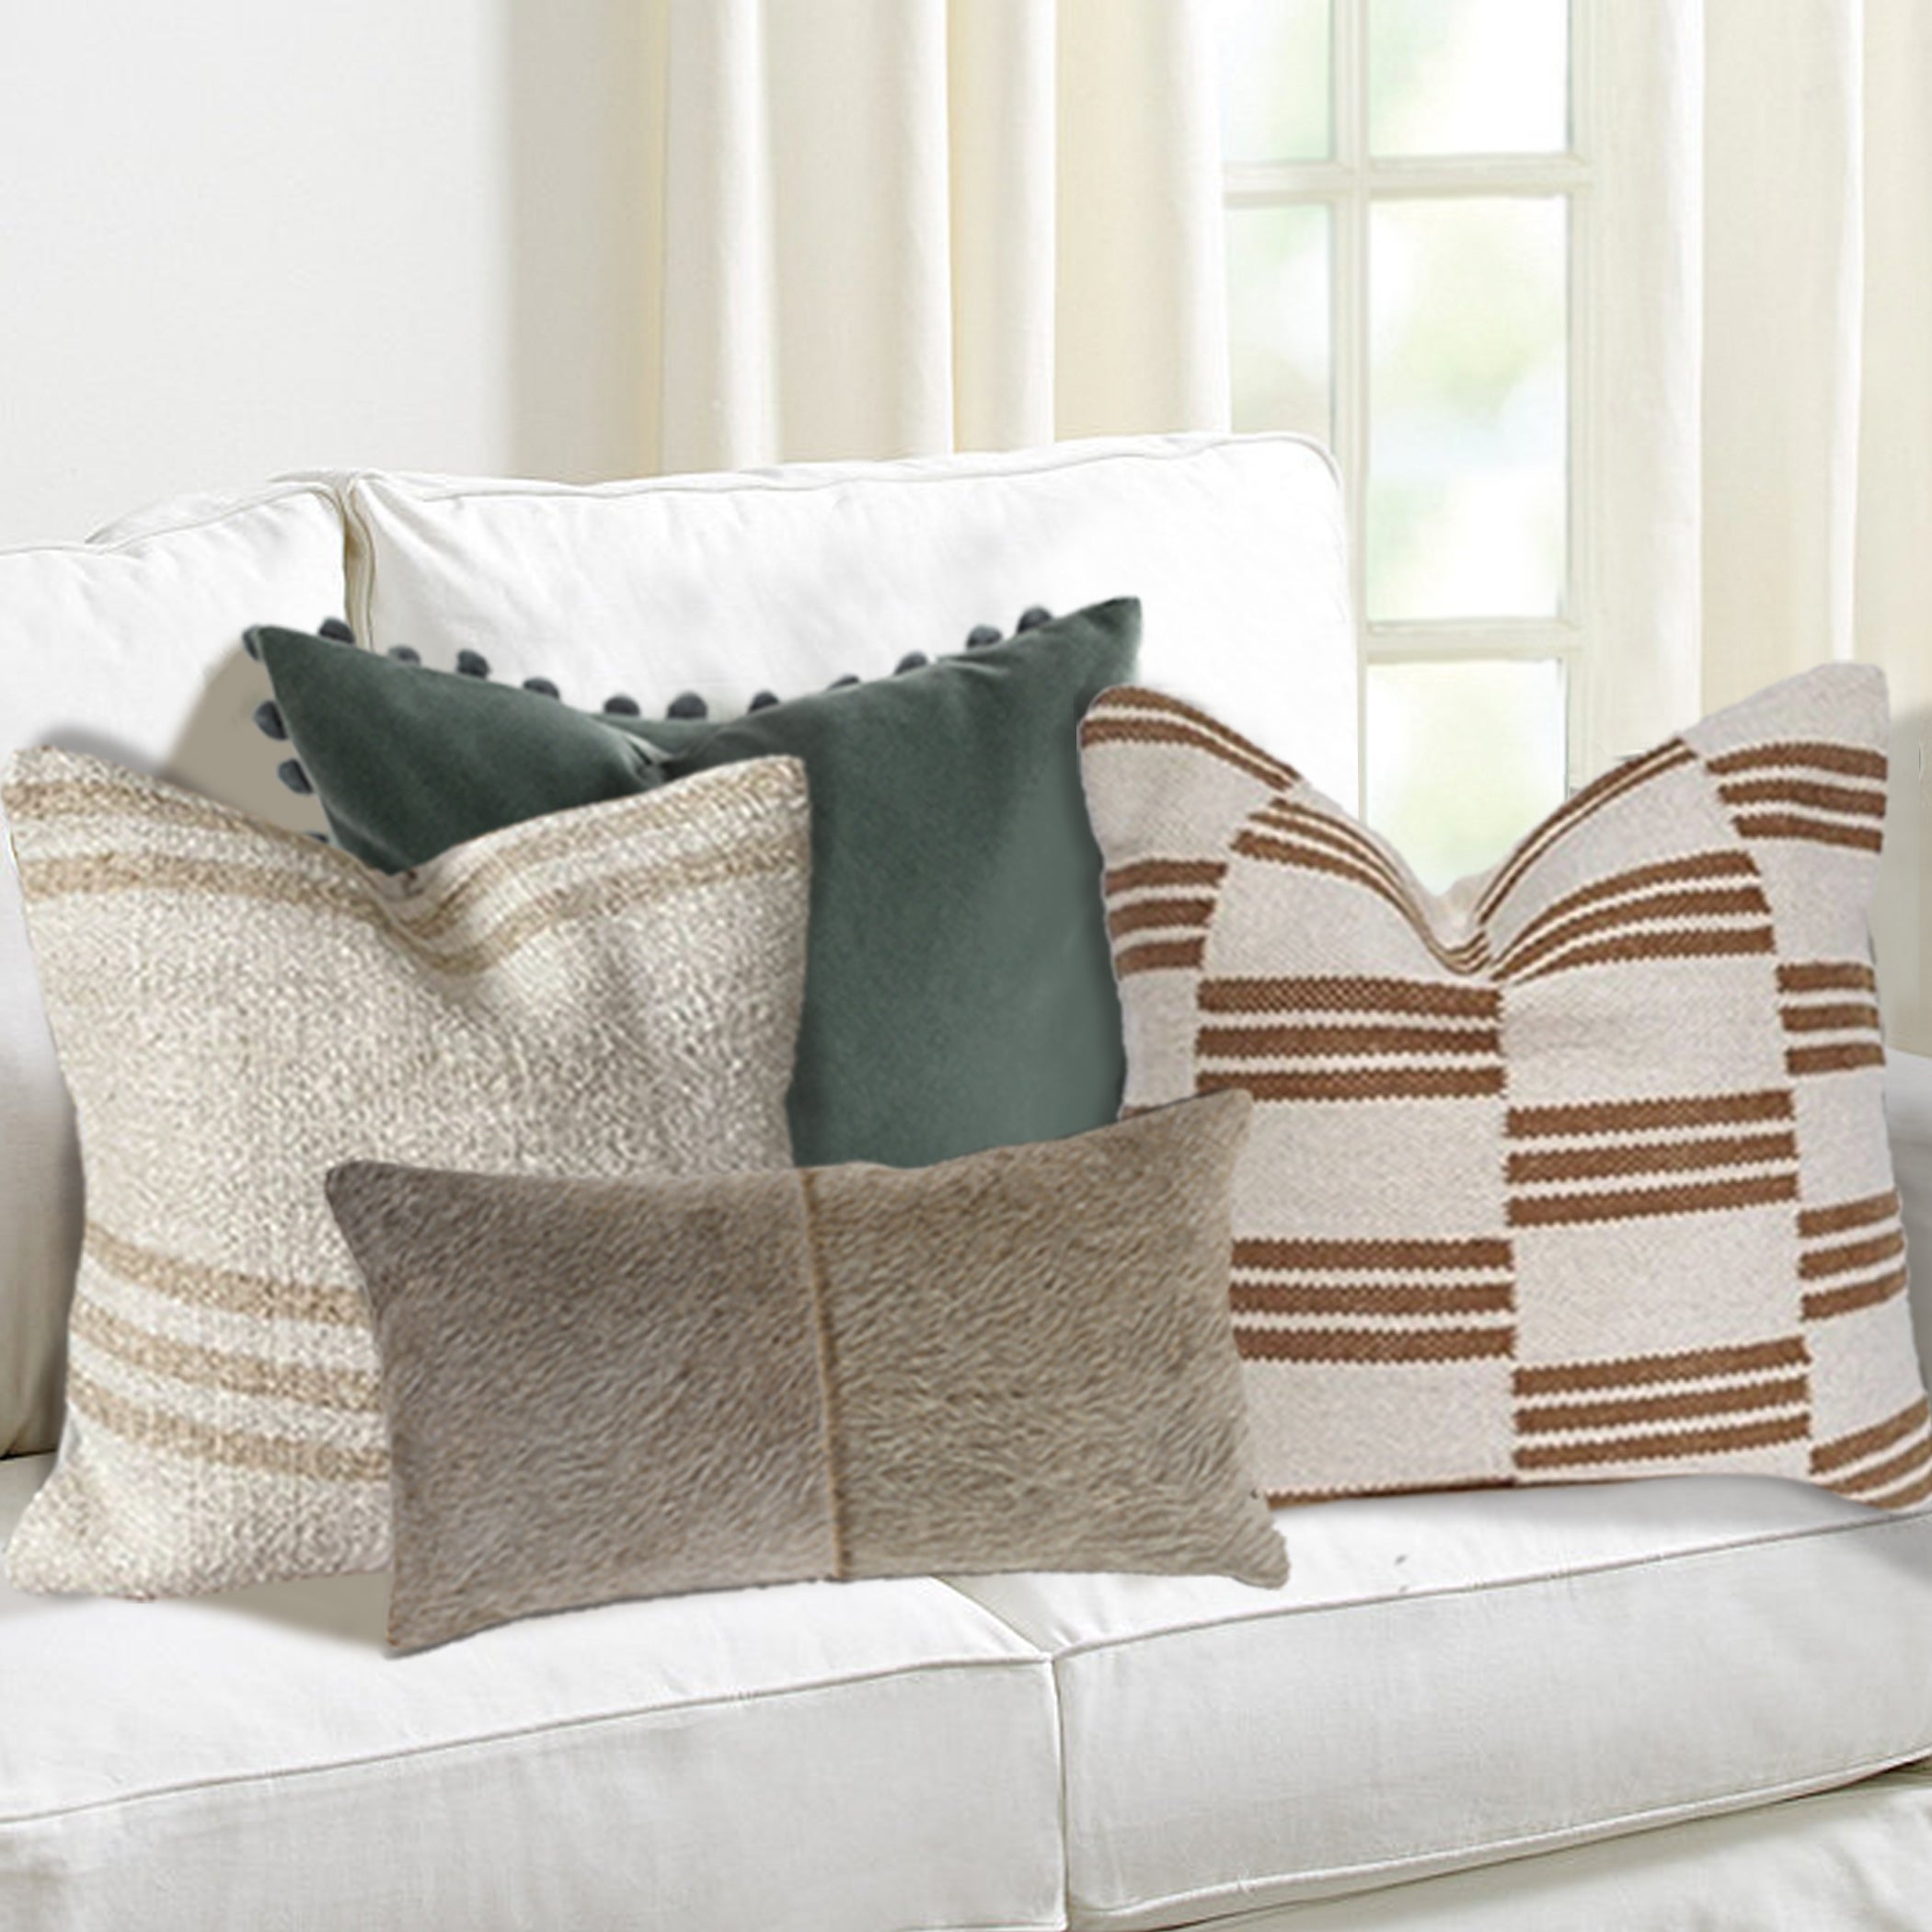 Pillow sofa set - white and brown